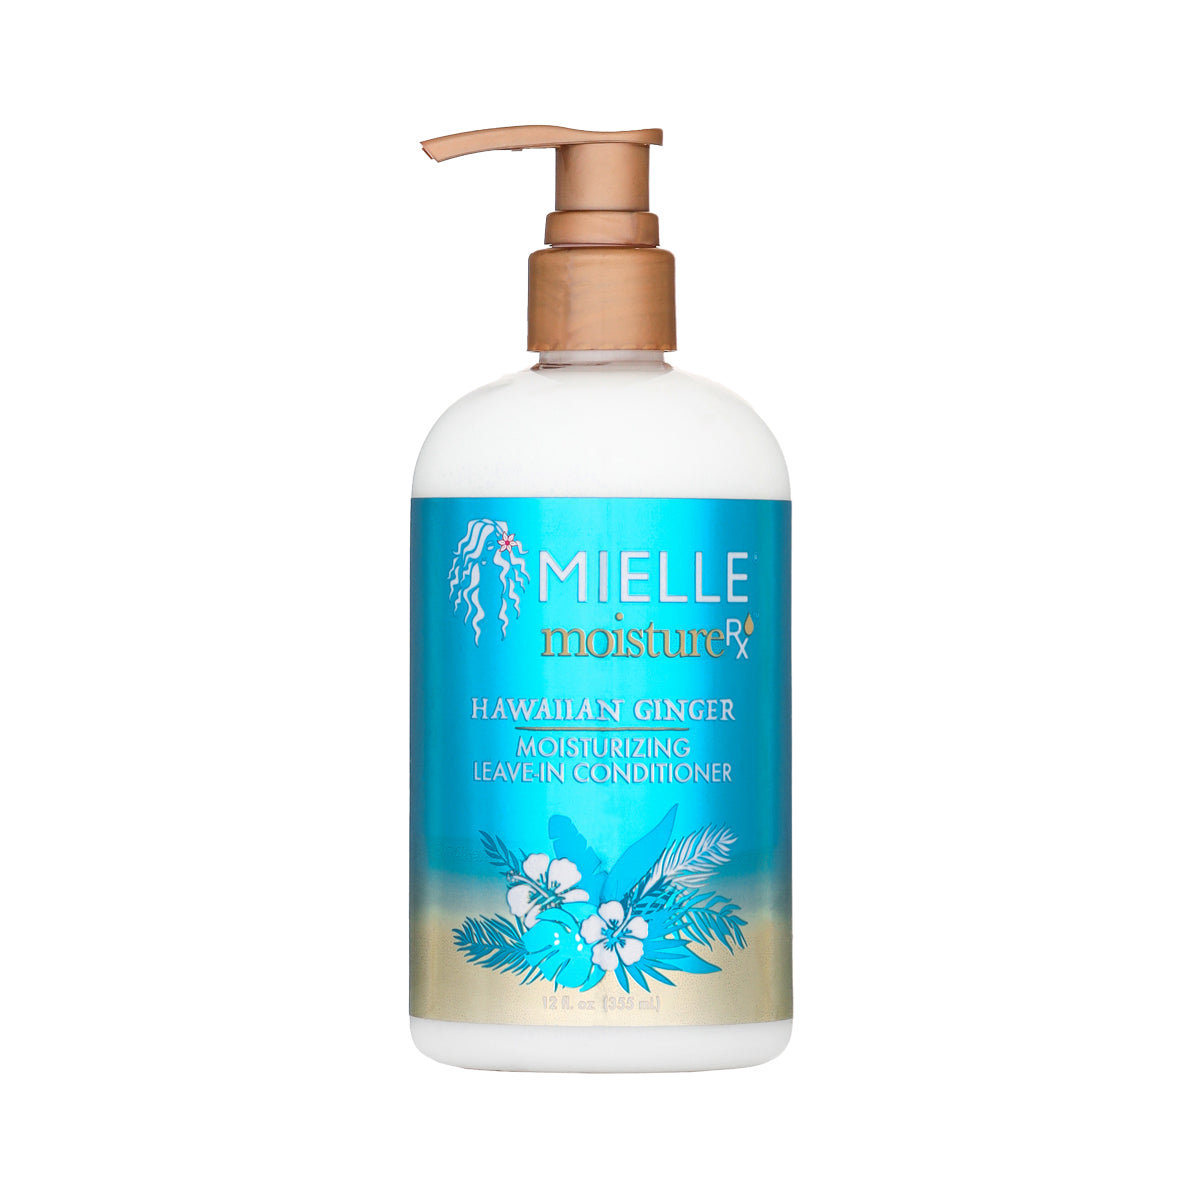 Mielle Organics - Moisture RX Hawaiian Ginger - Leave In Conditioner